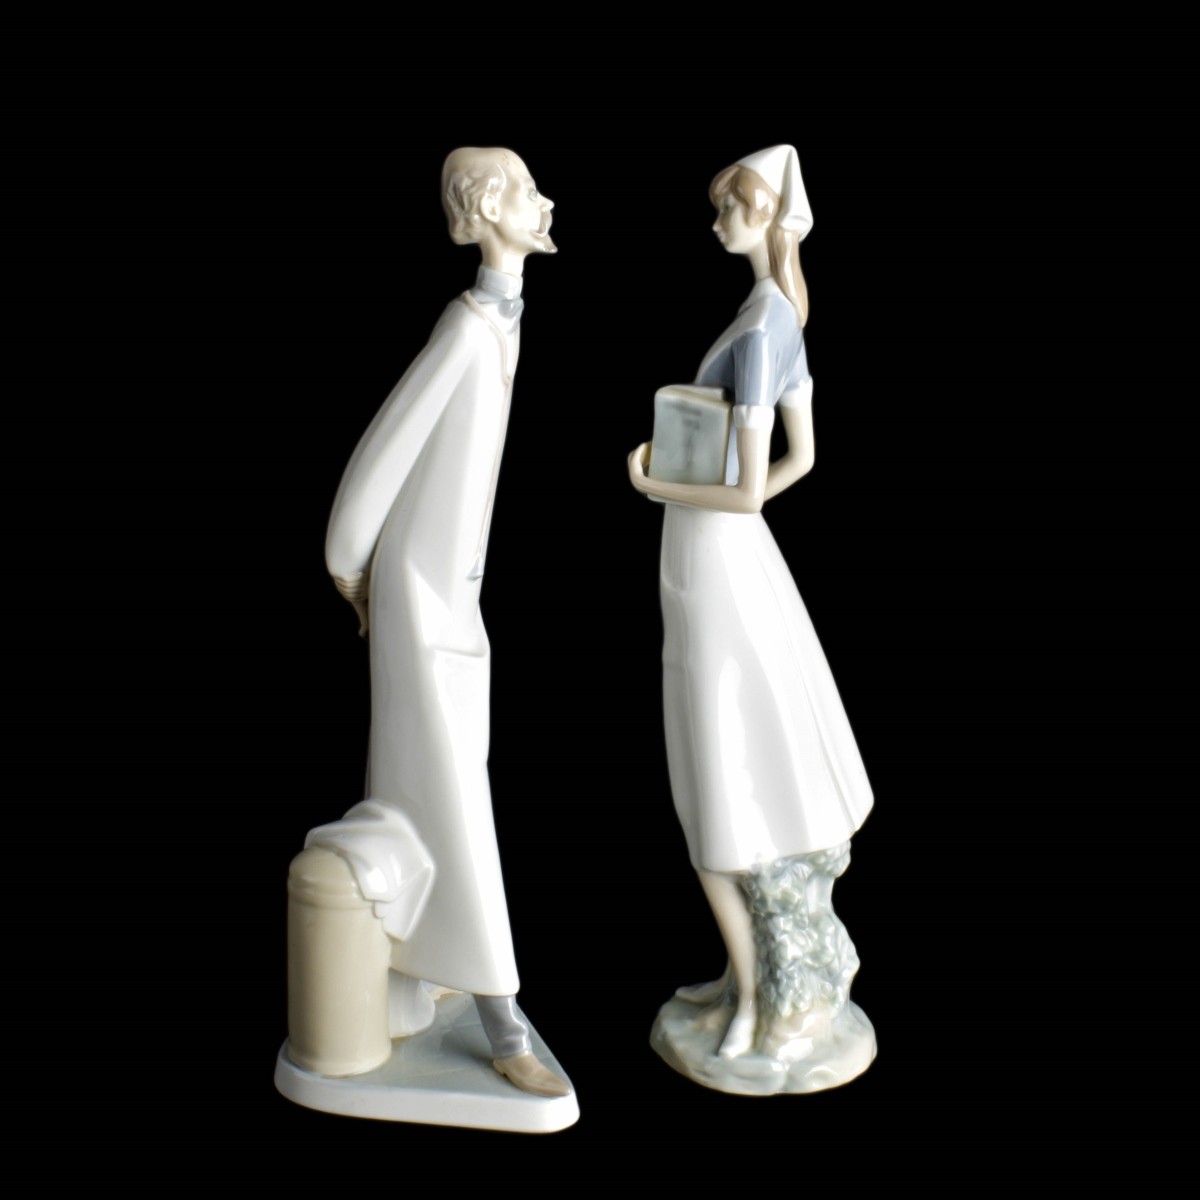 Pair of Large Lladro Figurines